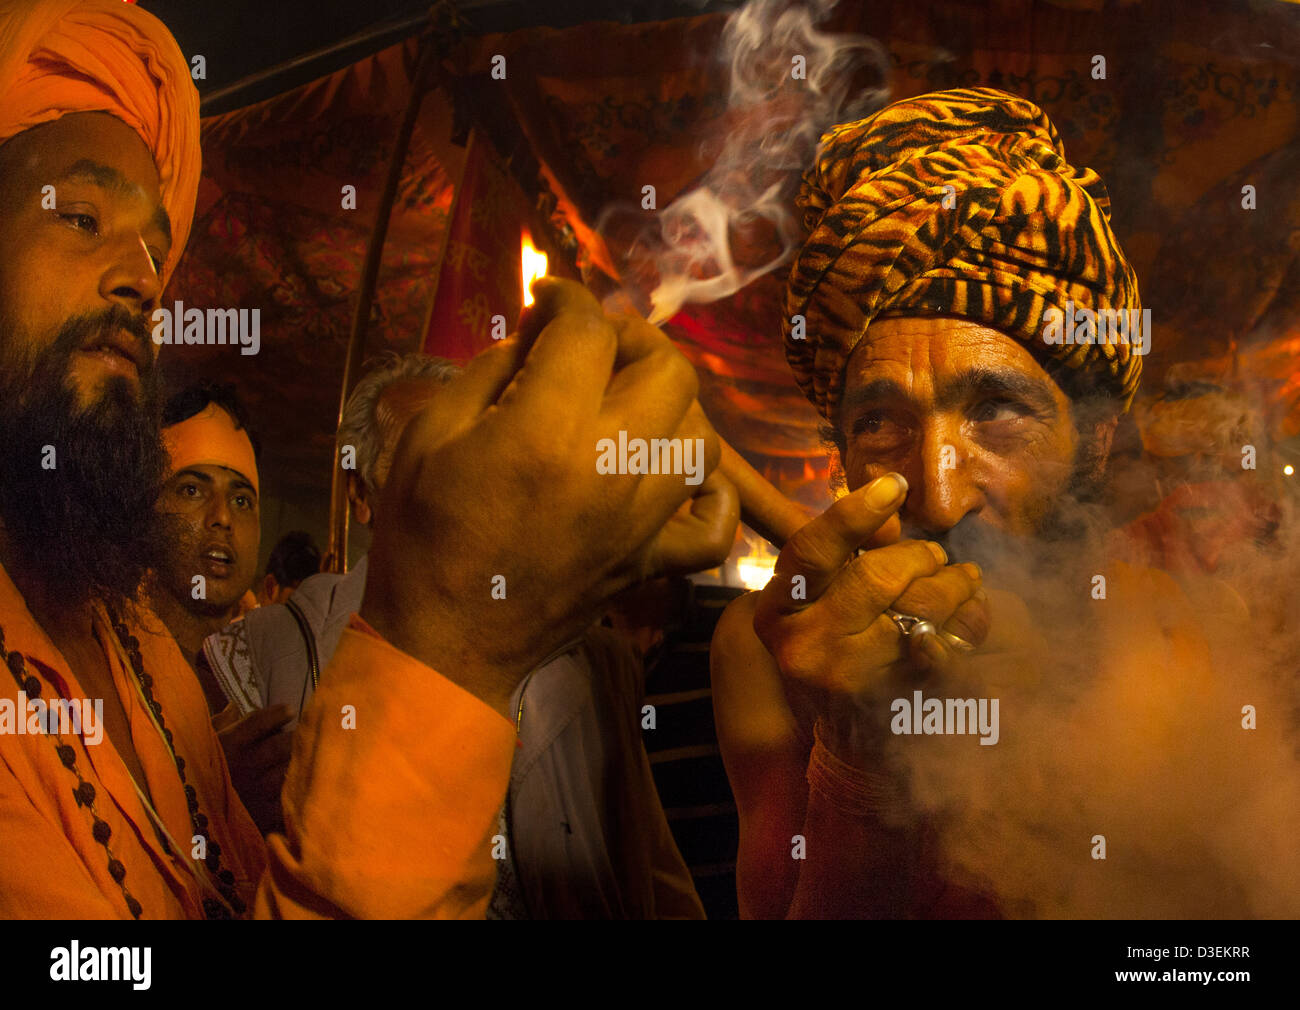 A Naga Sadhu Smoking Pot, Maha Kumbh Mela, Allahabad, India Stock Photo